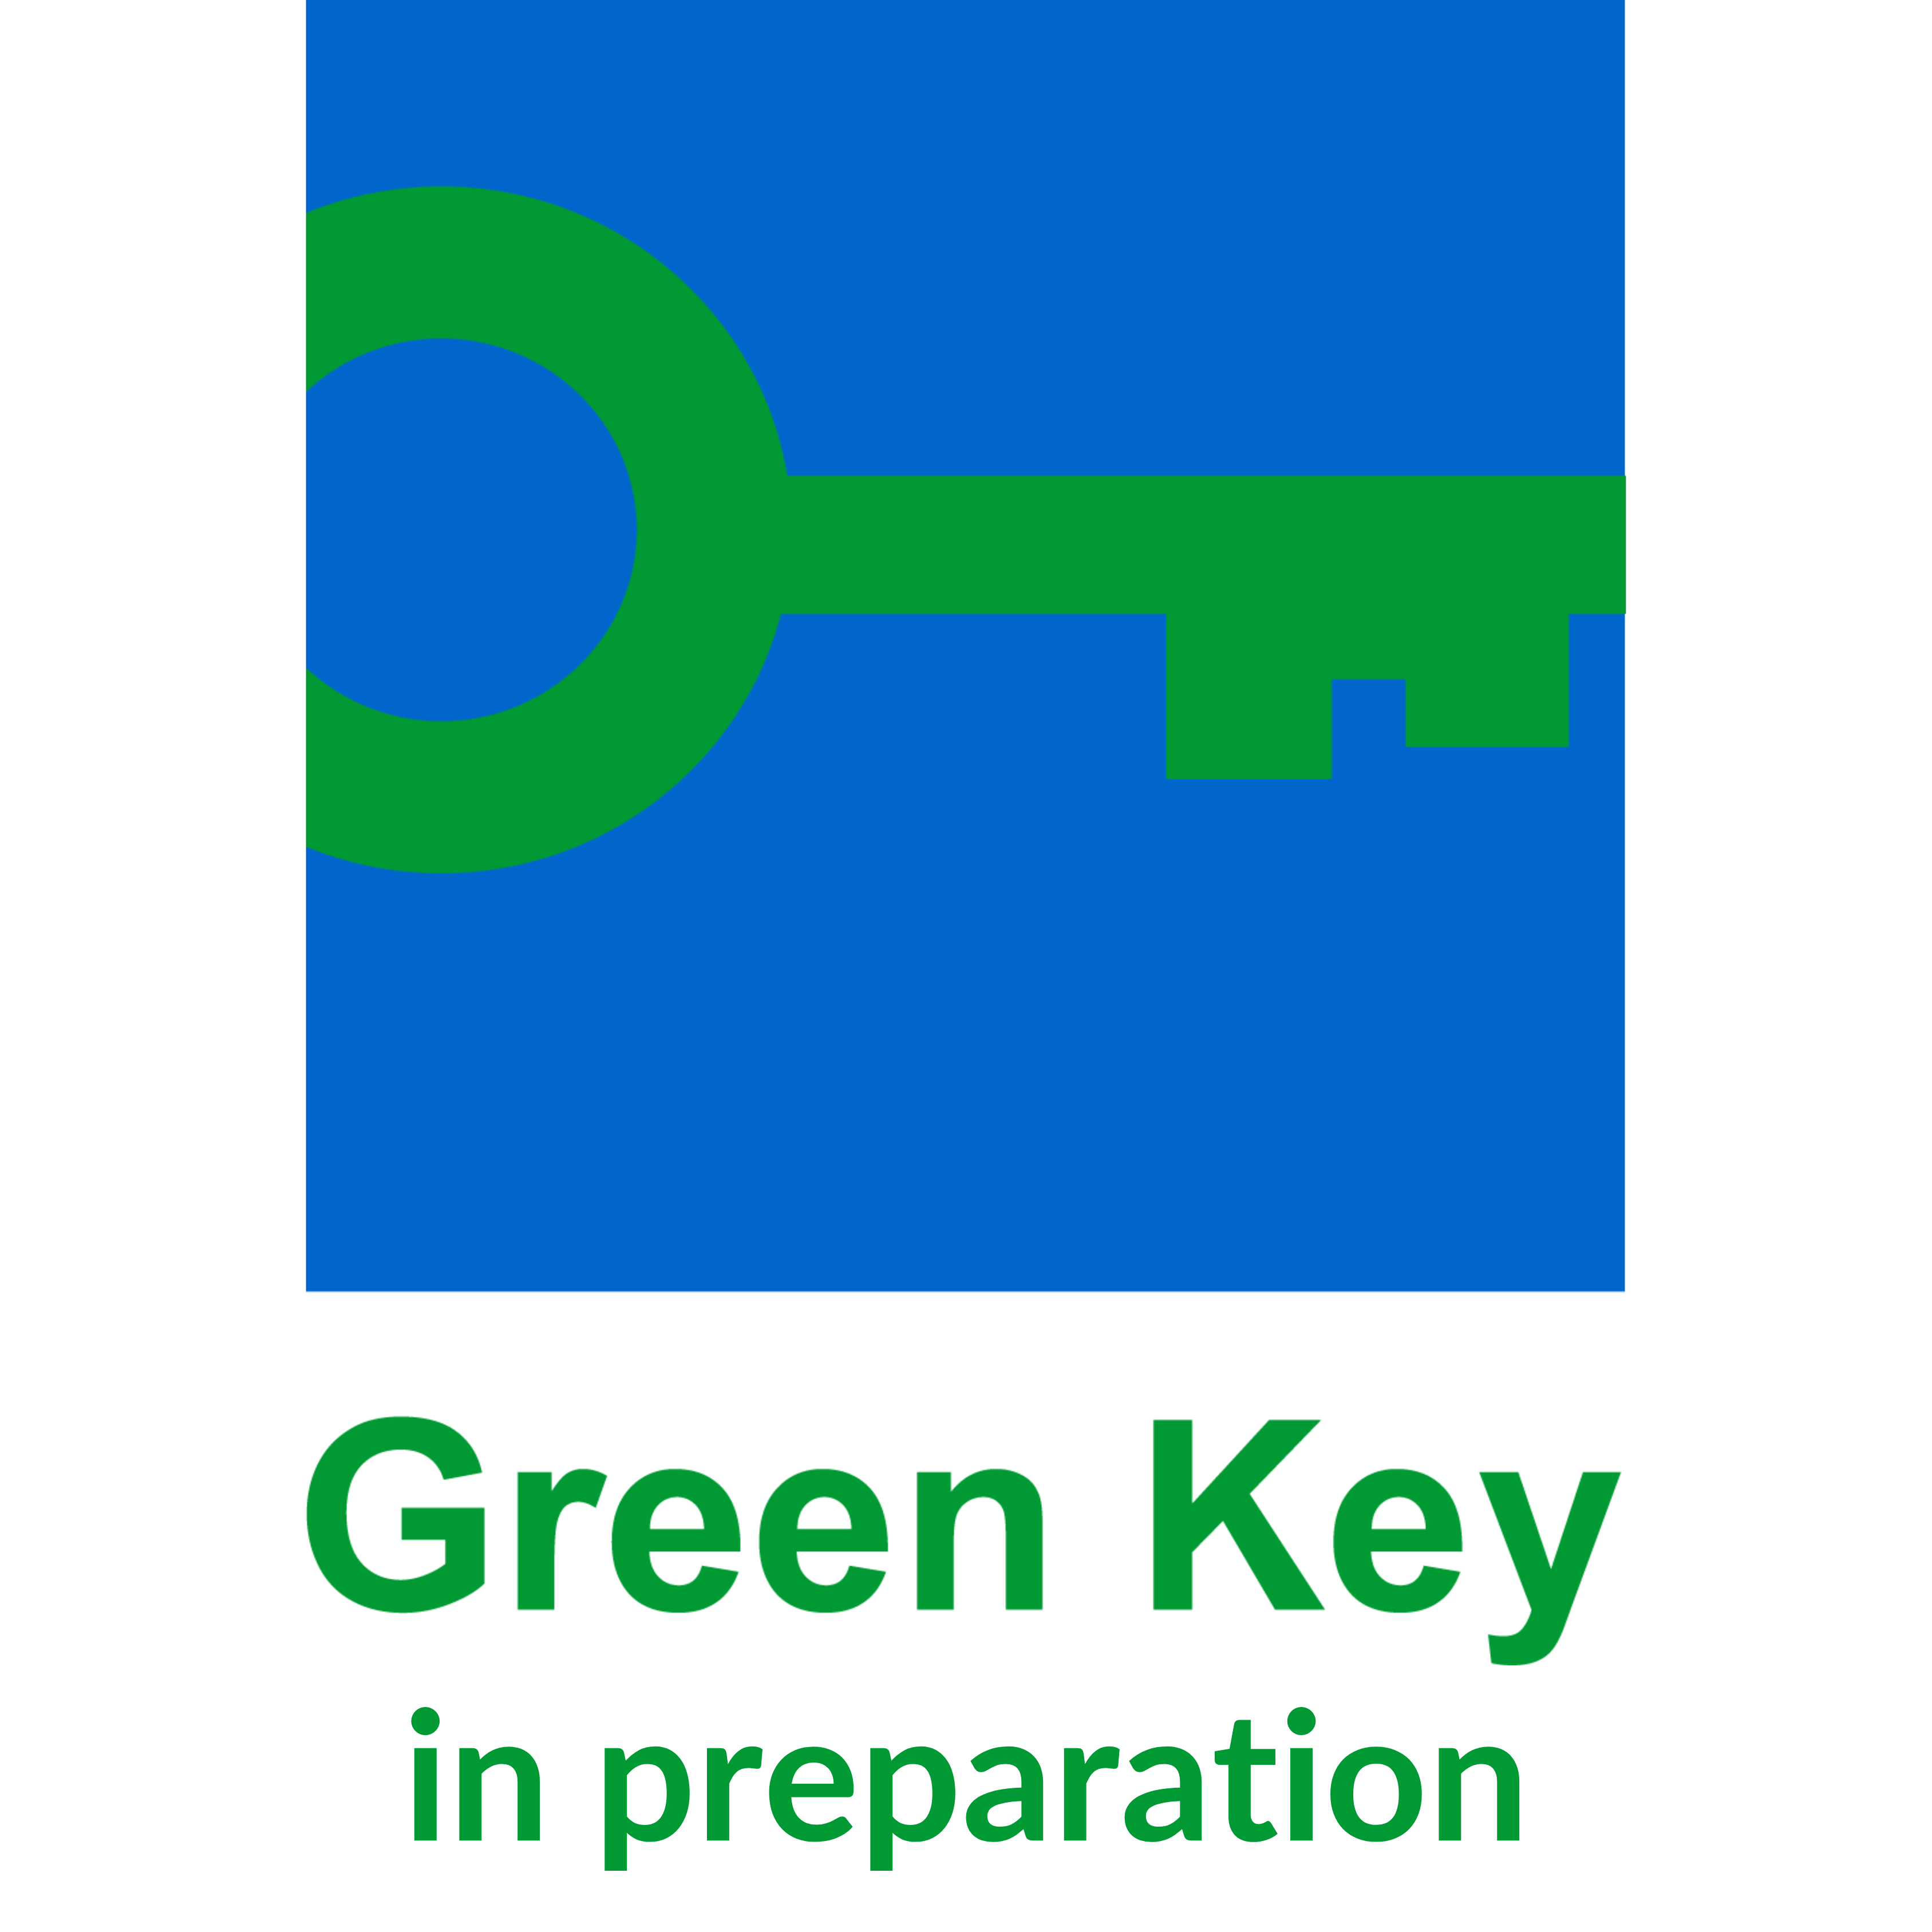 Green Key in preparation